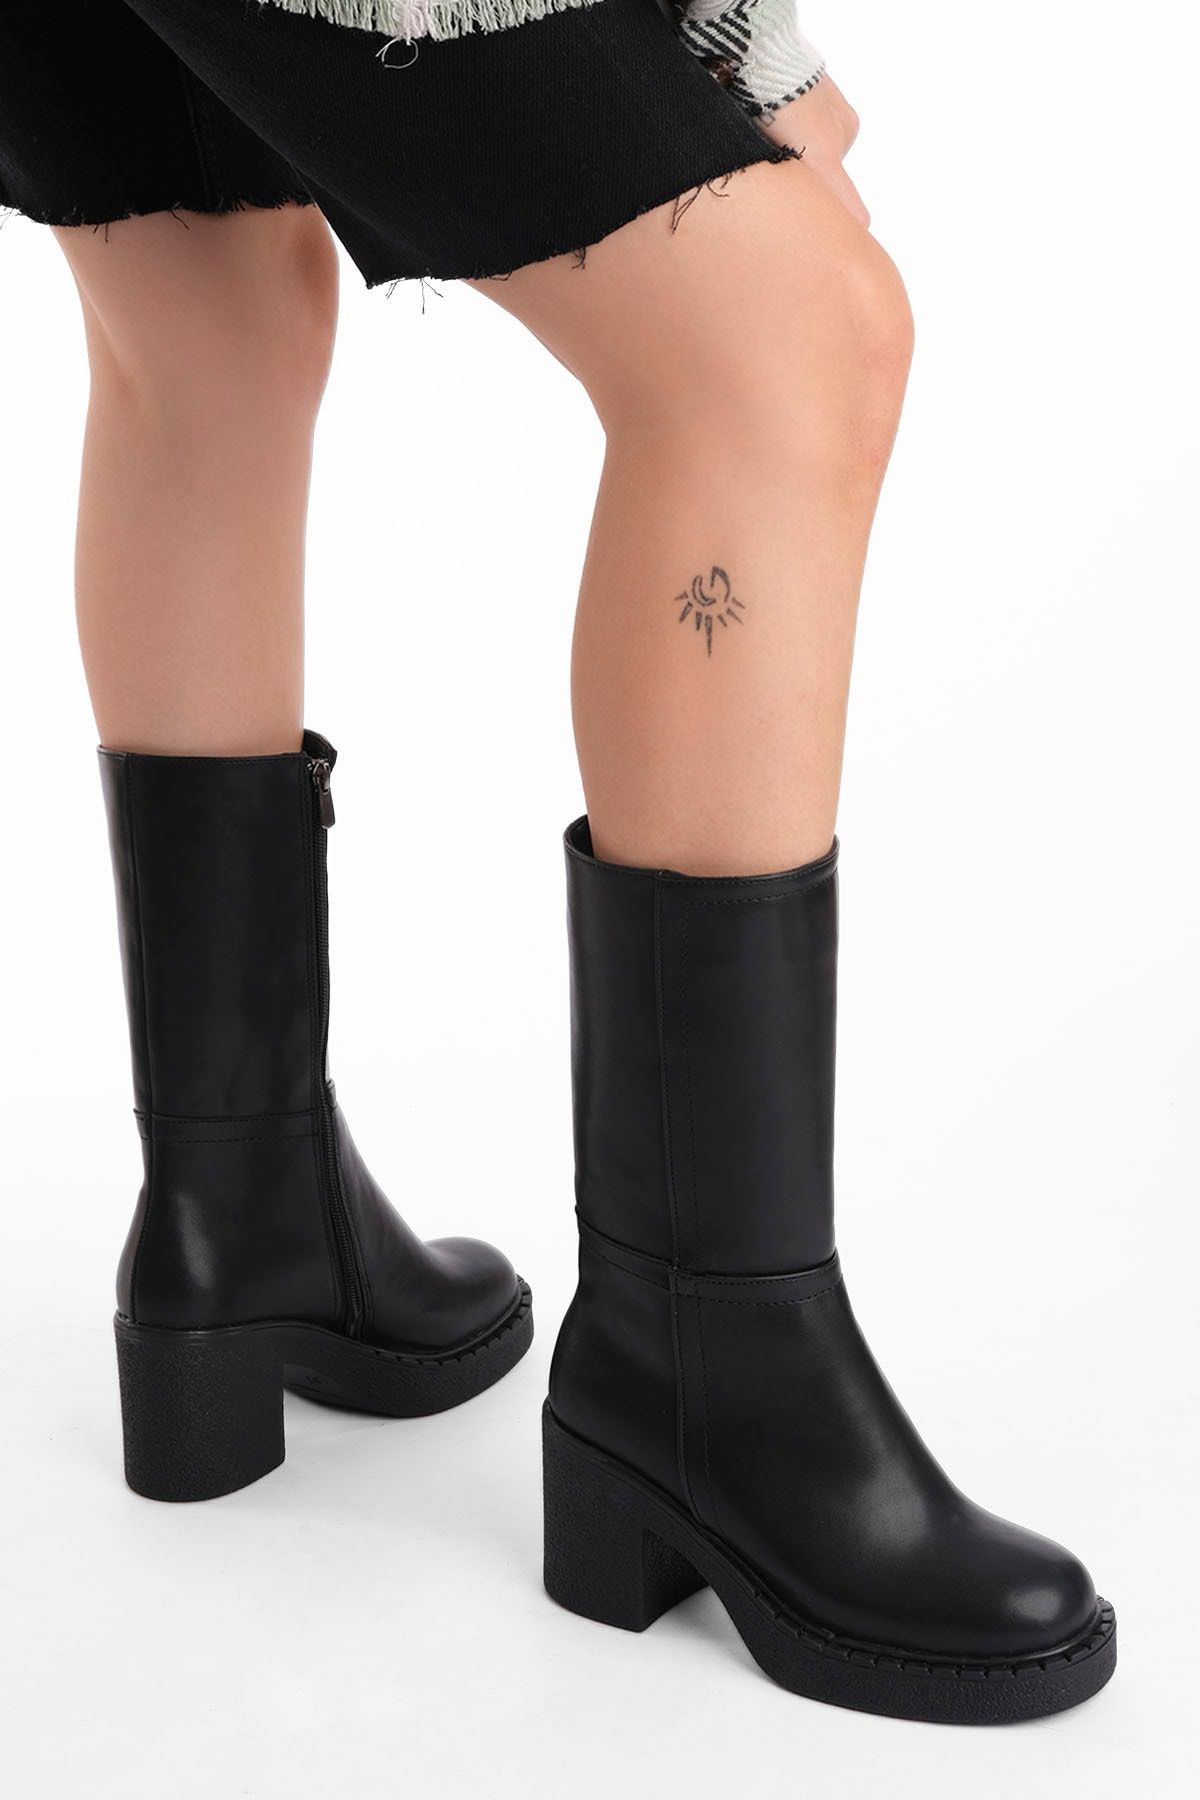 Marjin Kadın Platform Topuklu Çizme Krep Taban Lefla siyah